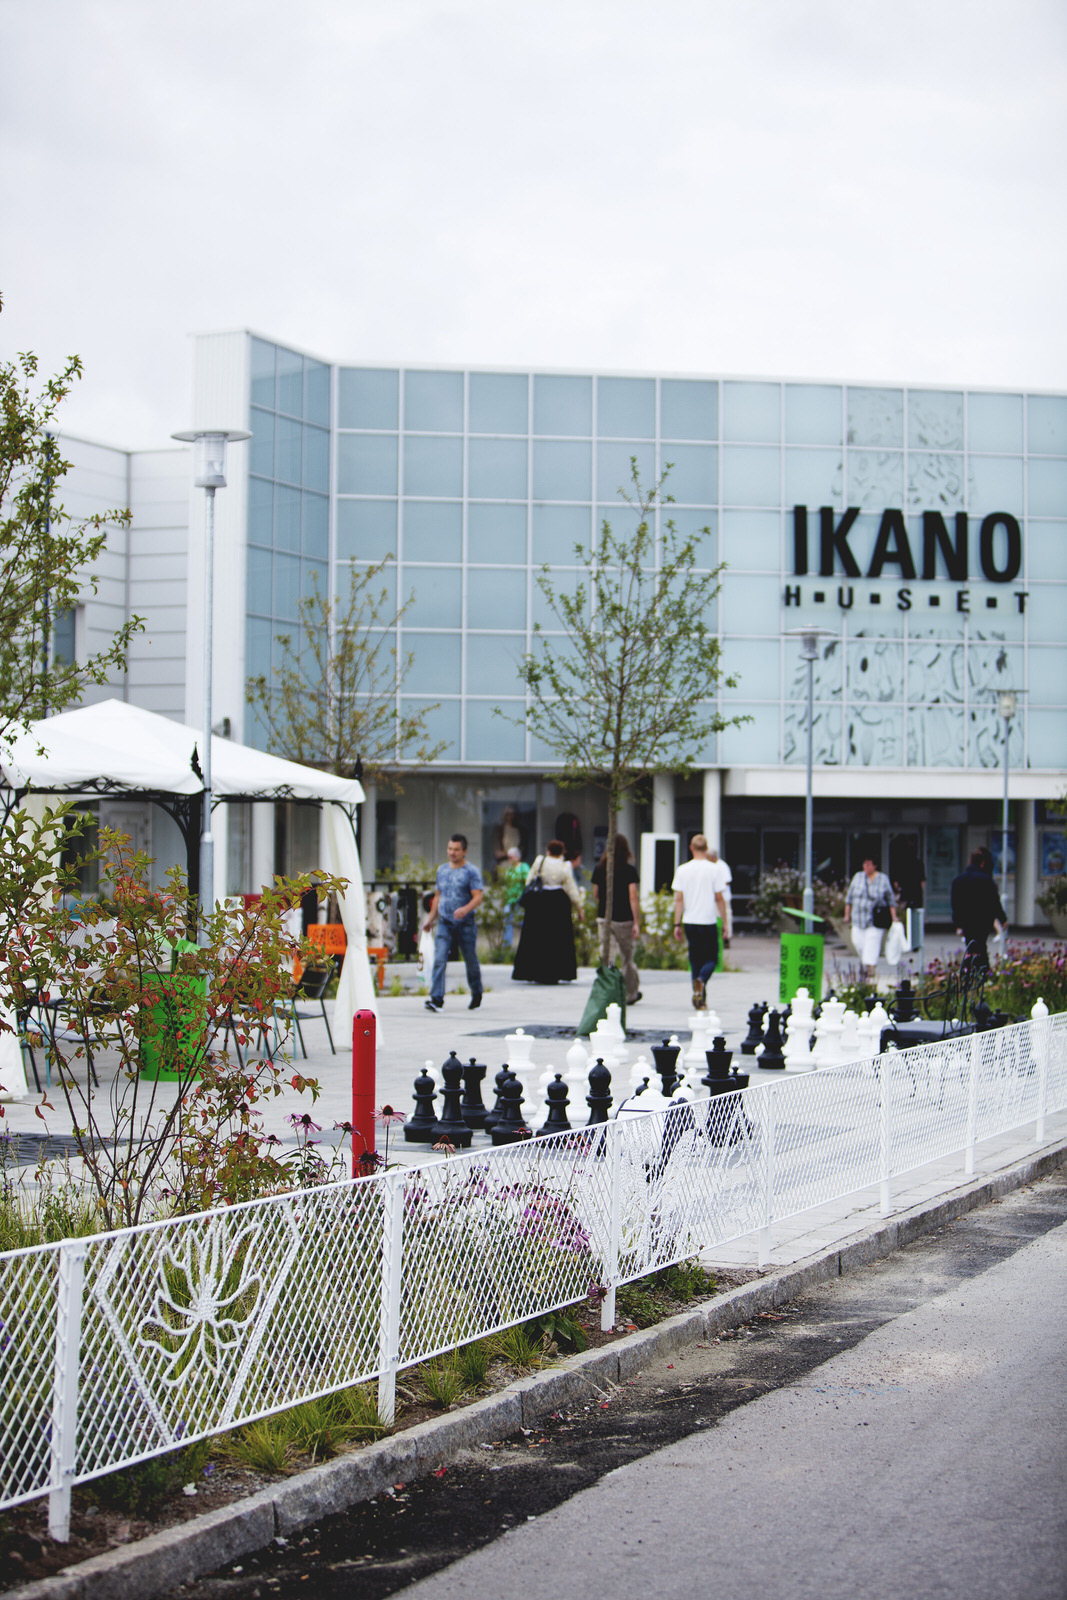 Mobilier urbain LAB23 pour Ikano Mall Suède